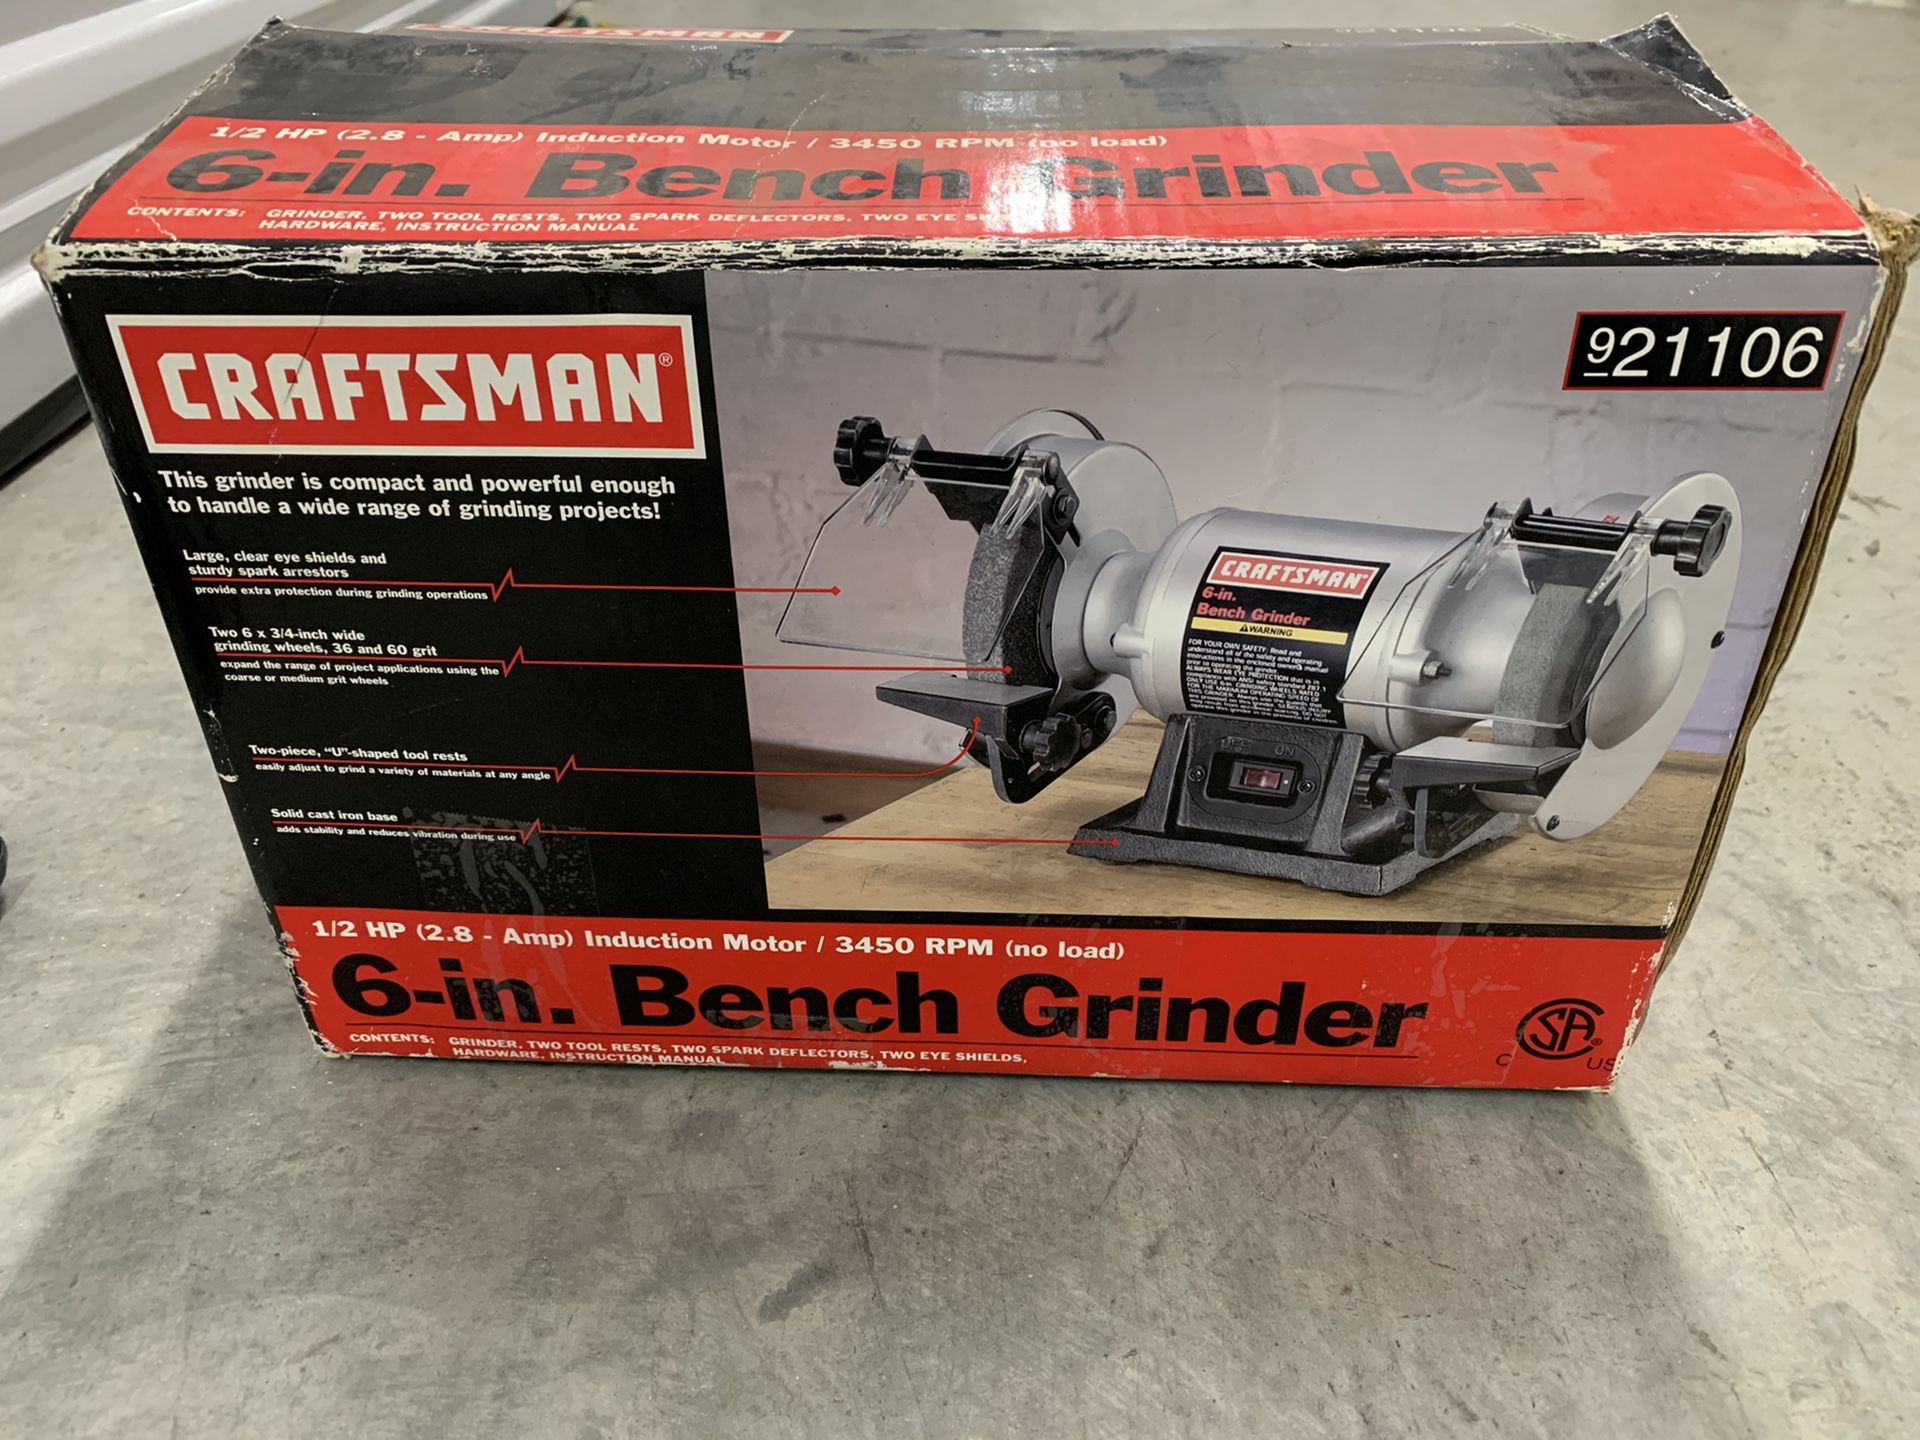 6-in. Bench Grinder 1/2 HP (2.8-Amp) Craftsman